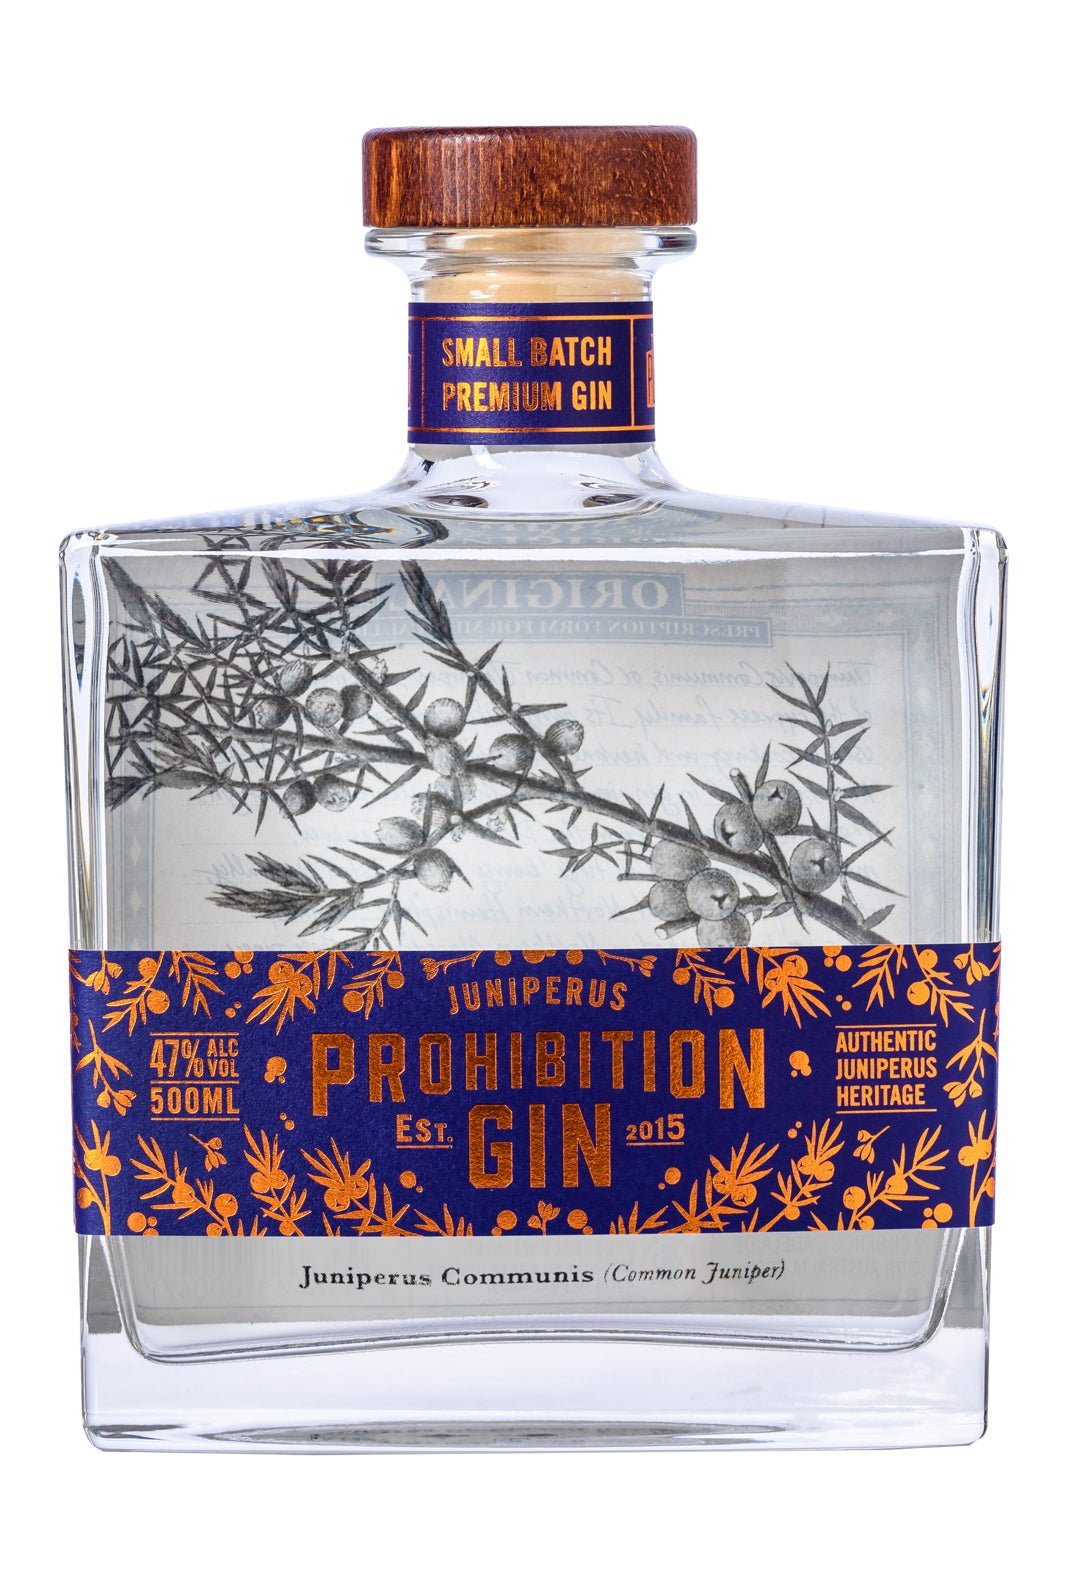 Prohibition Juniperus Gin 47% 500ml | Gin | Shop online at Spirits of France